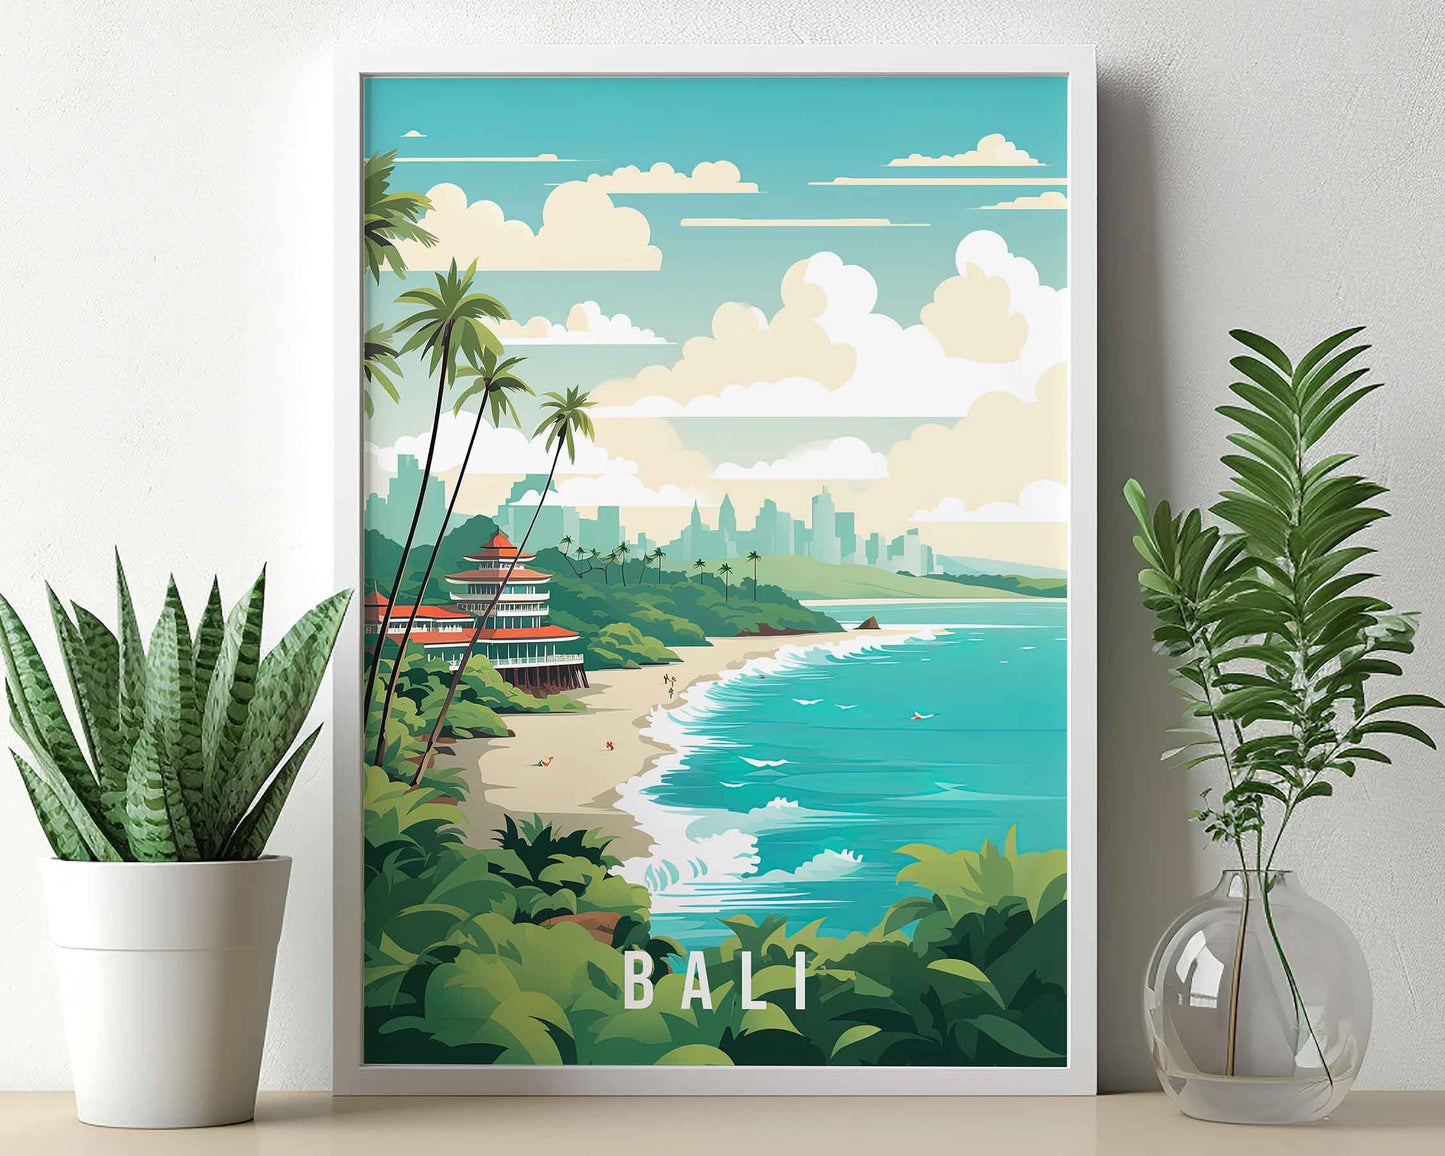 Framed Image of Bali Indonesia Travel Illustration Poster Prints Wall Art